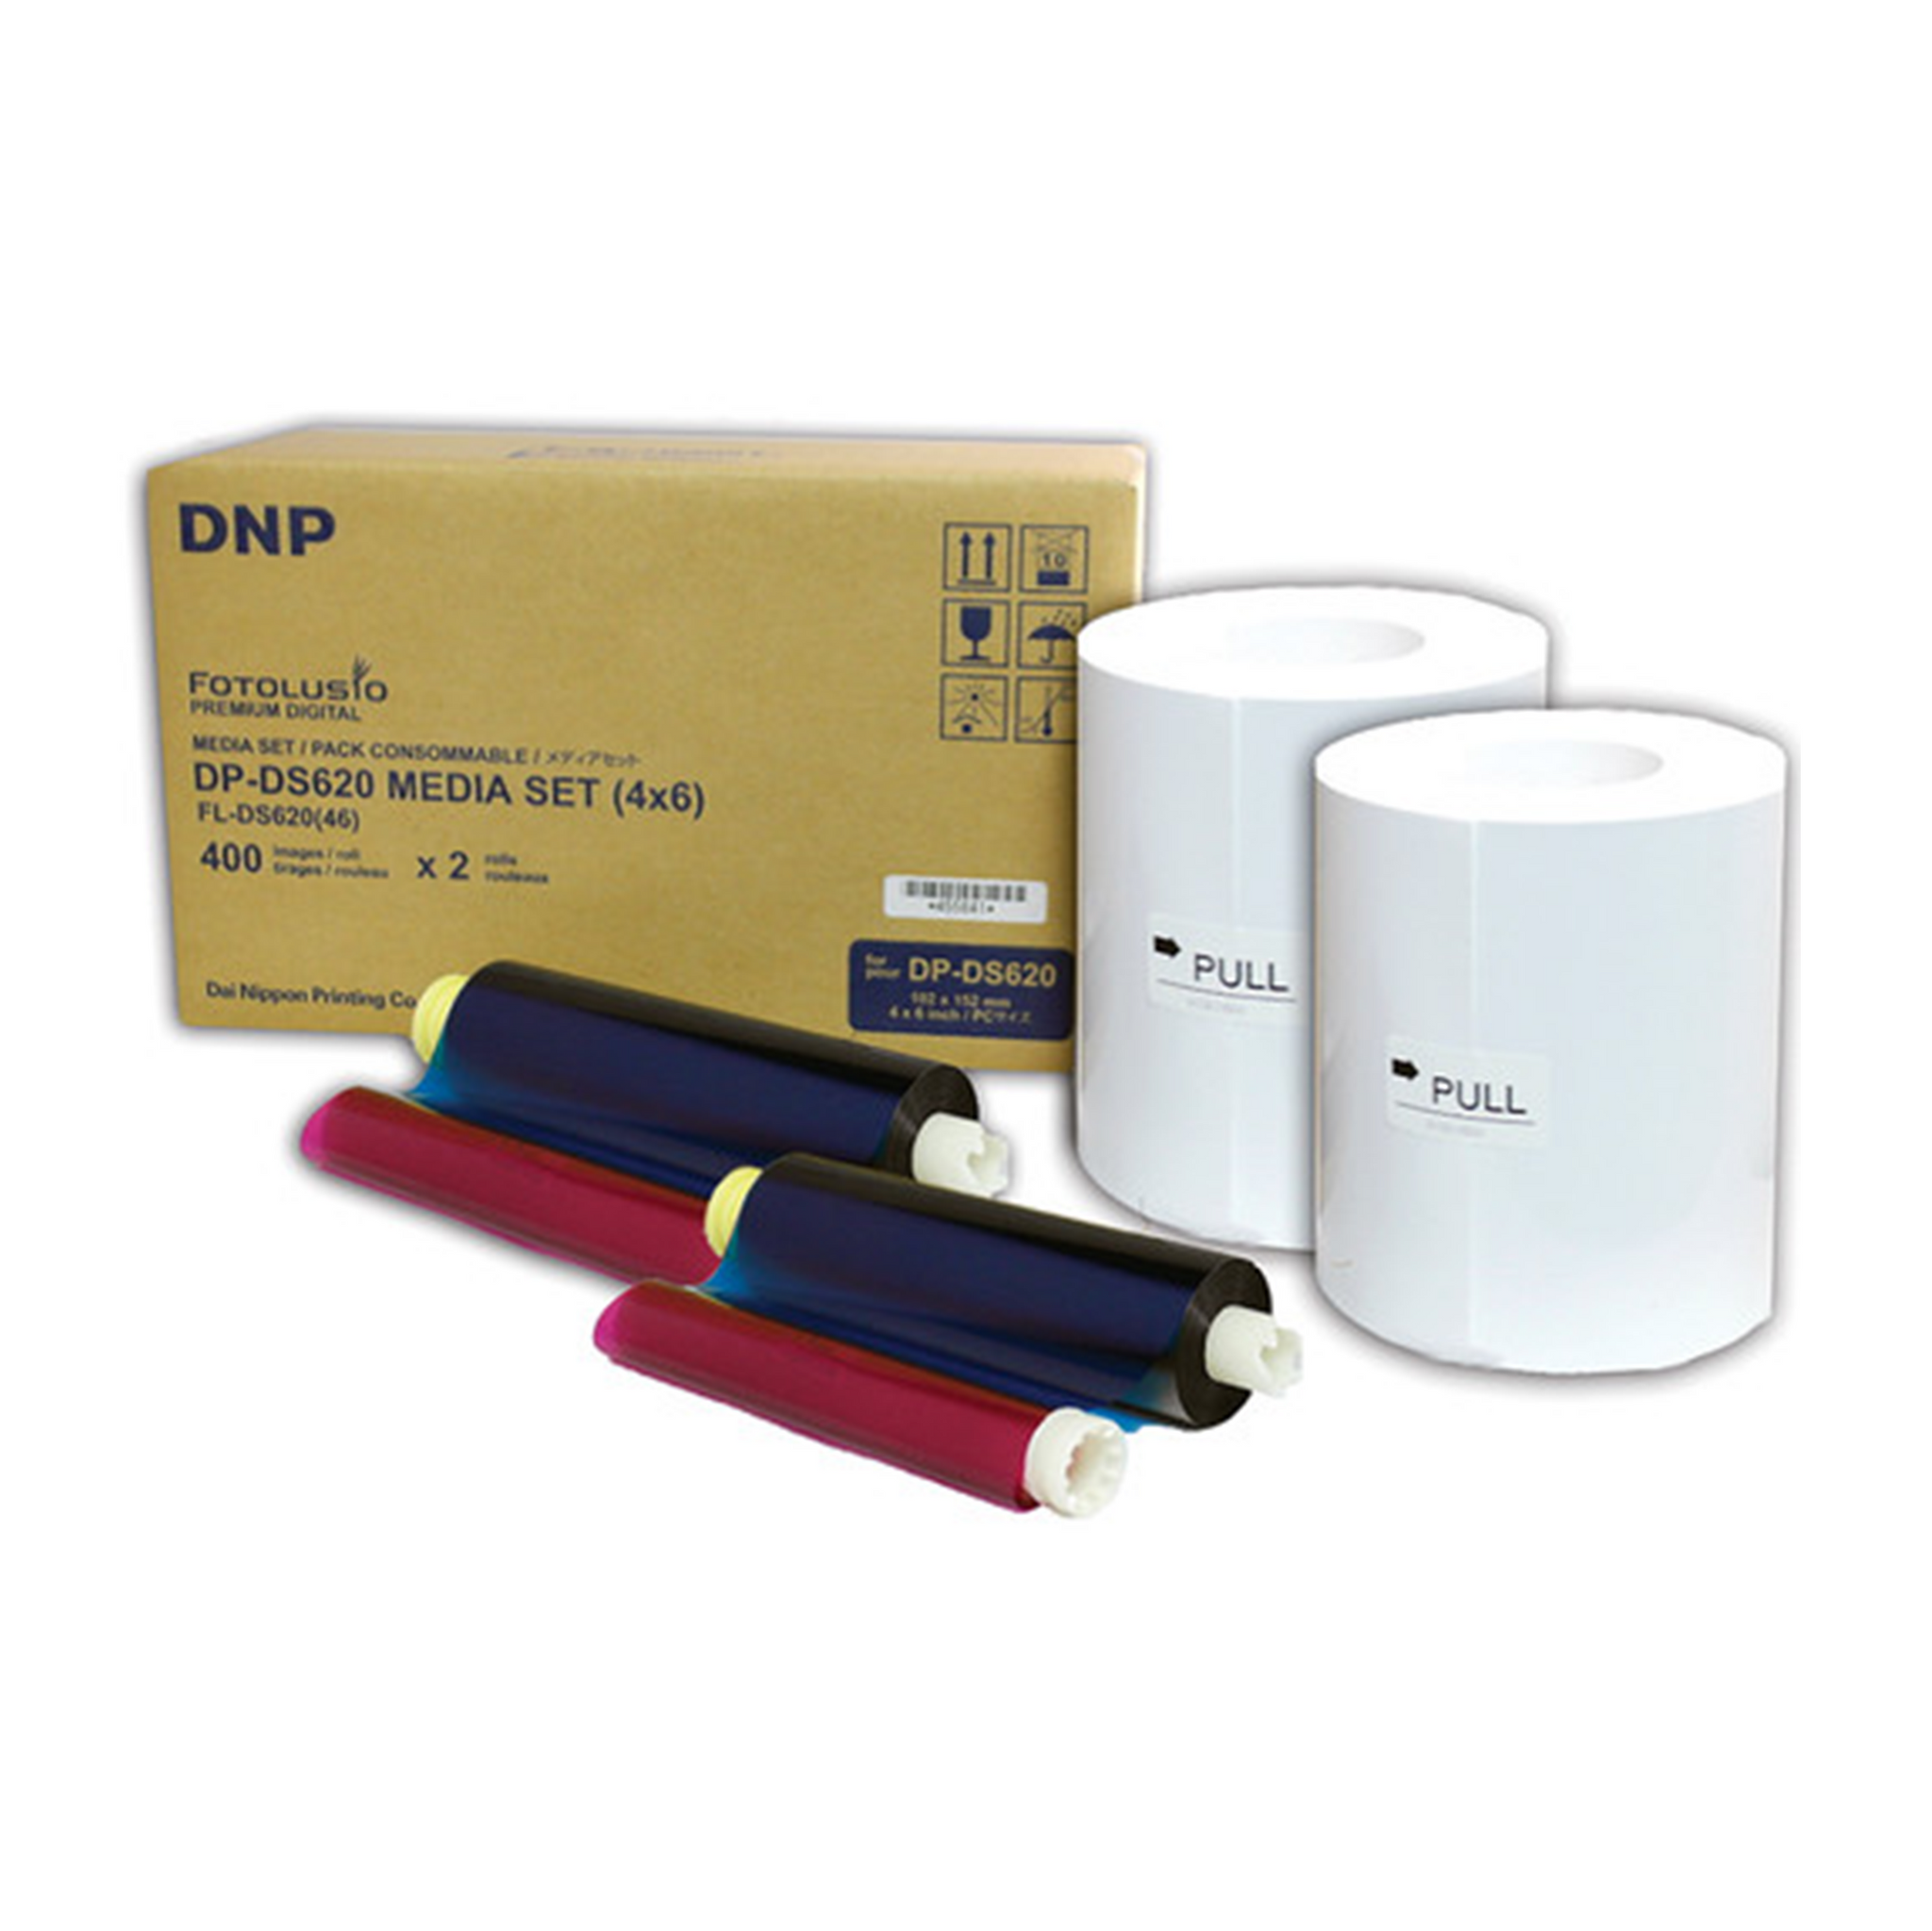 DNP DP-DS620 (4x6) Dye-Sub Media Set For DS620A Printer (400prints x 2 roll)-Printers-futuromic